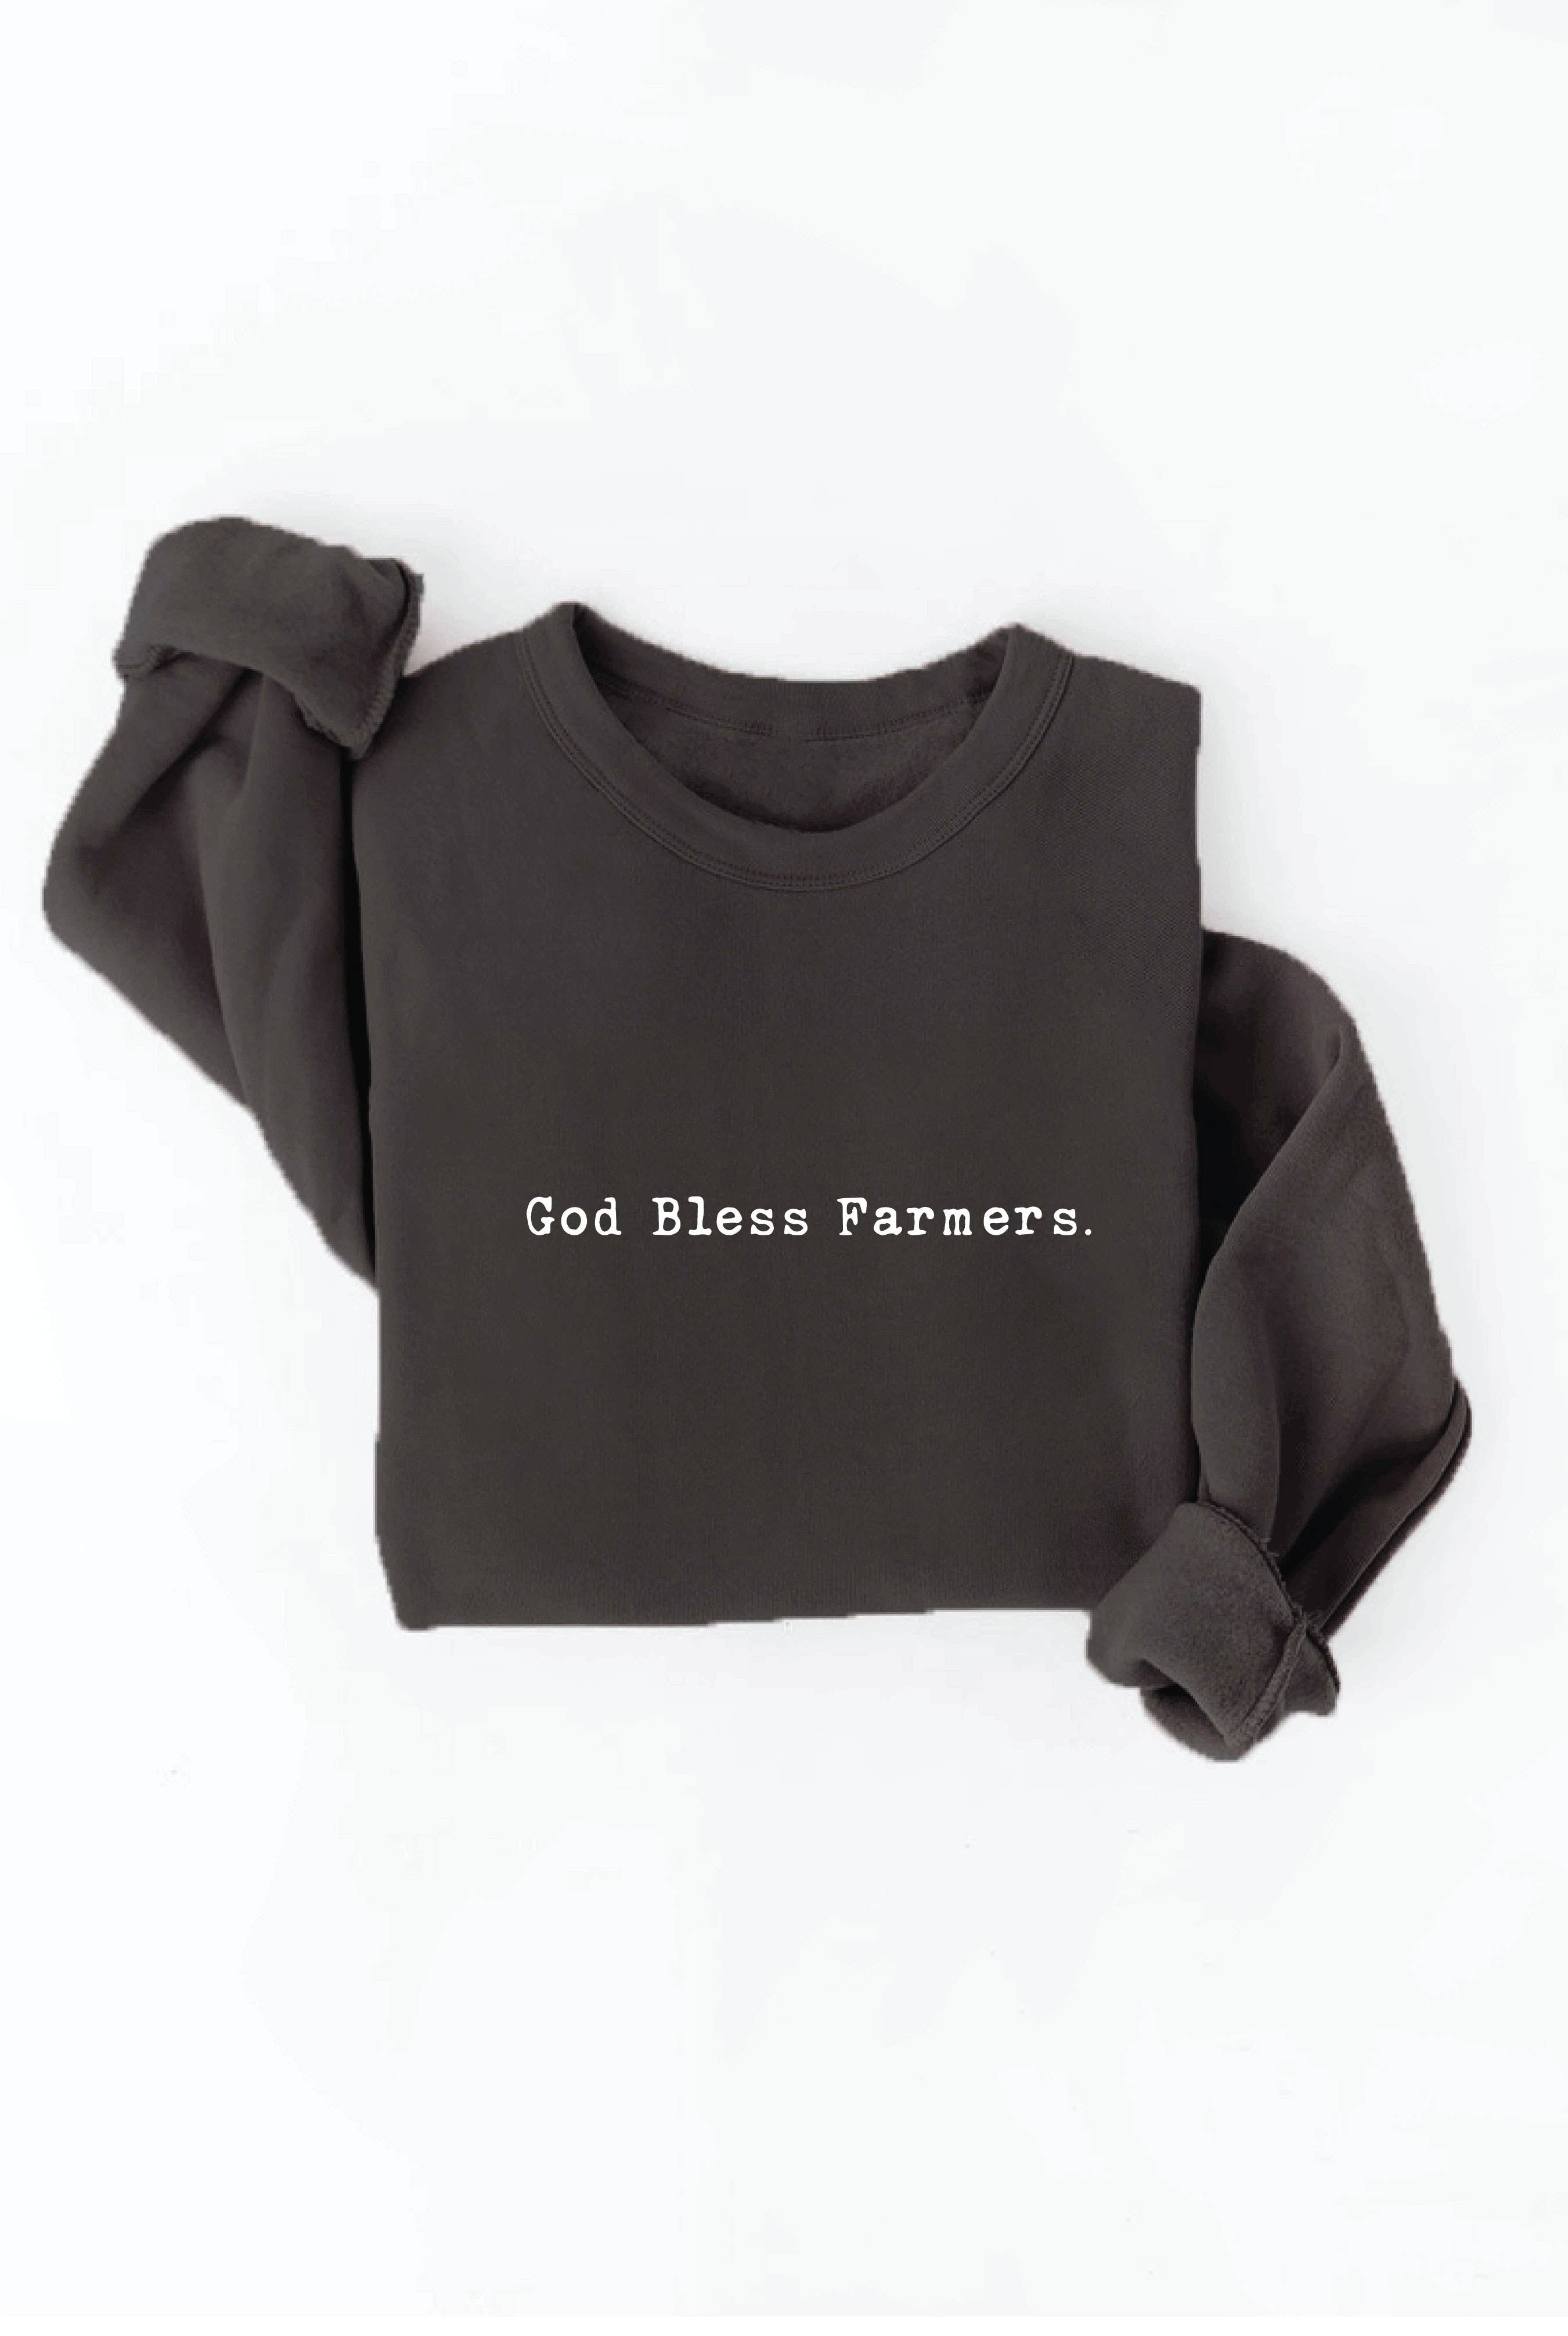 GOD BLESS FARMERS. Graphic Sweatshirt: L / VINTAGE WHITE LONG SLEEVE